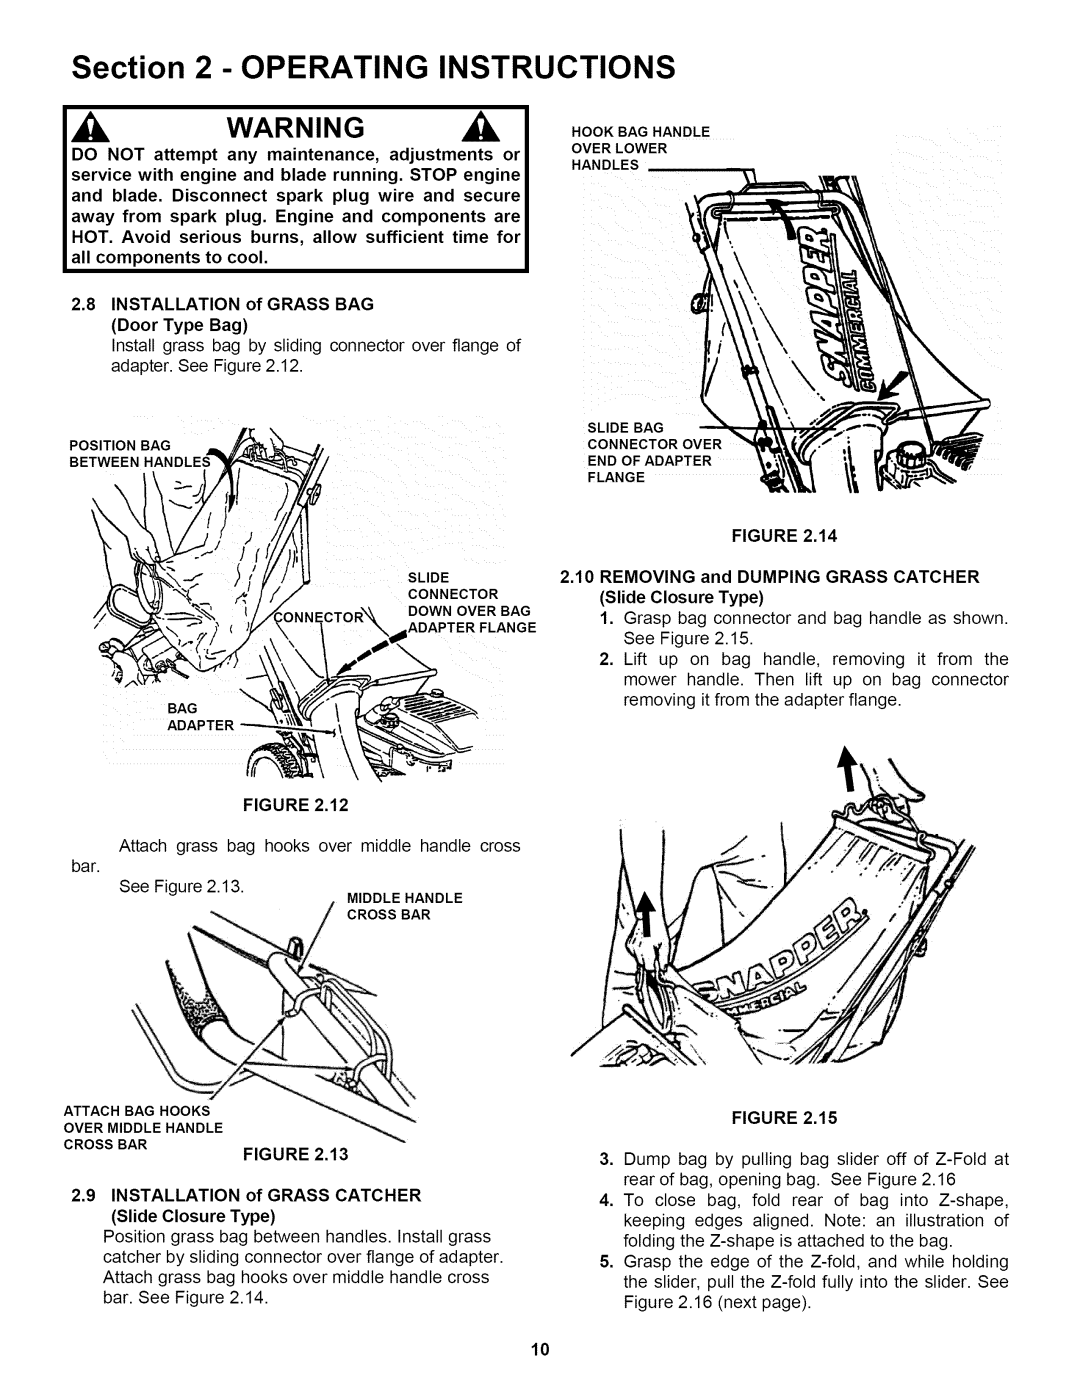 Snapper 216518B Operatinginstructions, 2.8INSTALLATION of GRASS BAG Door Type Bag, 9INSTALLATION of GRASS CATCHER, Figure 